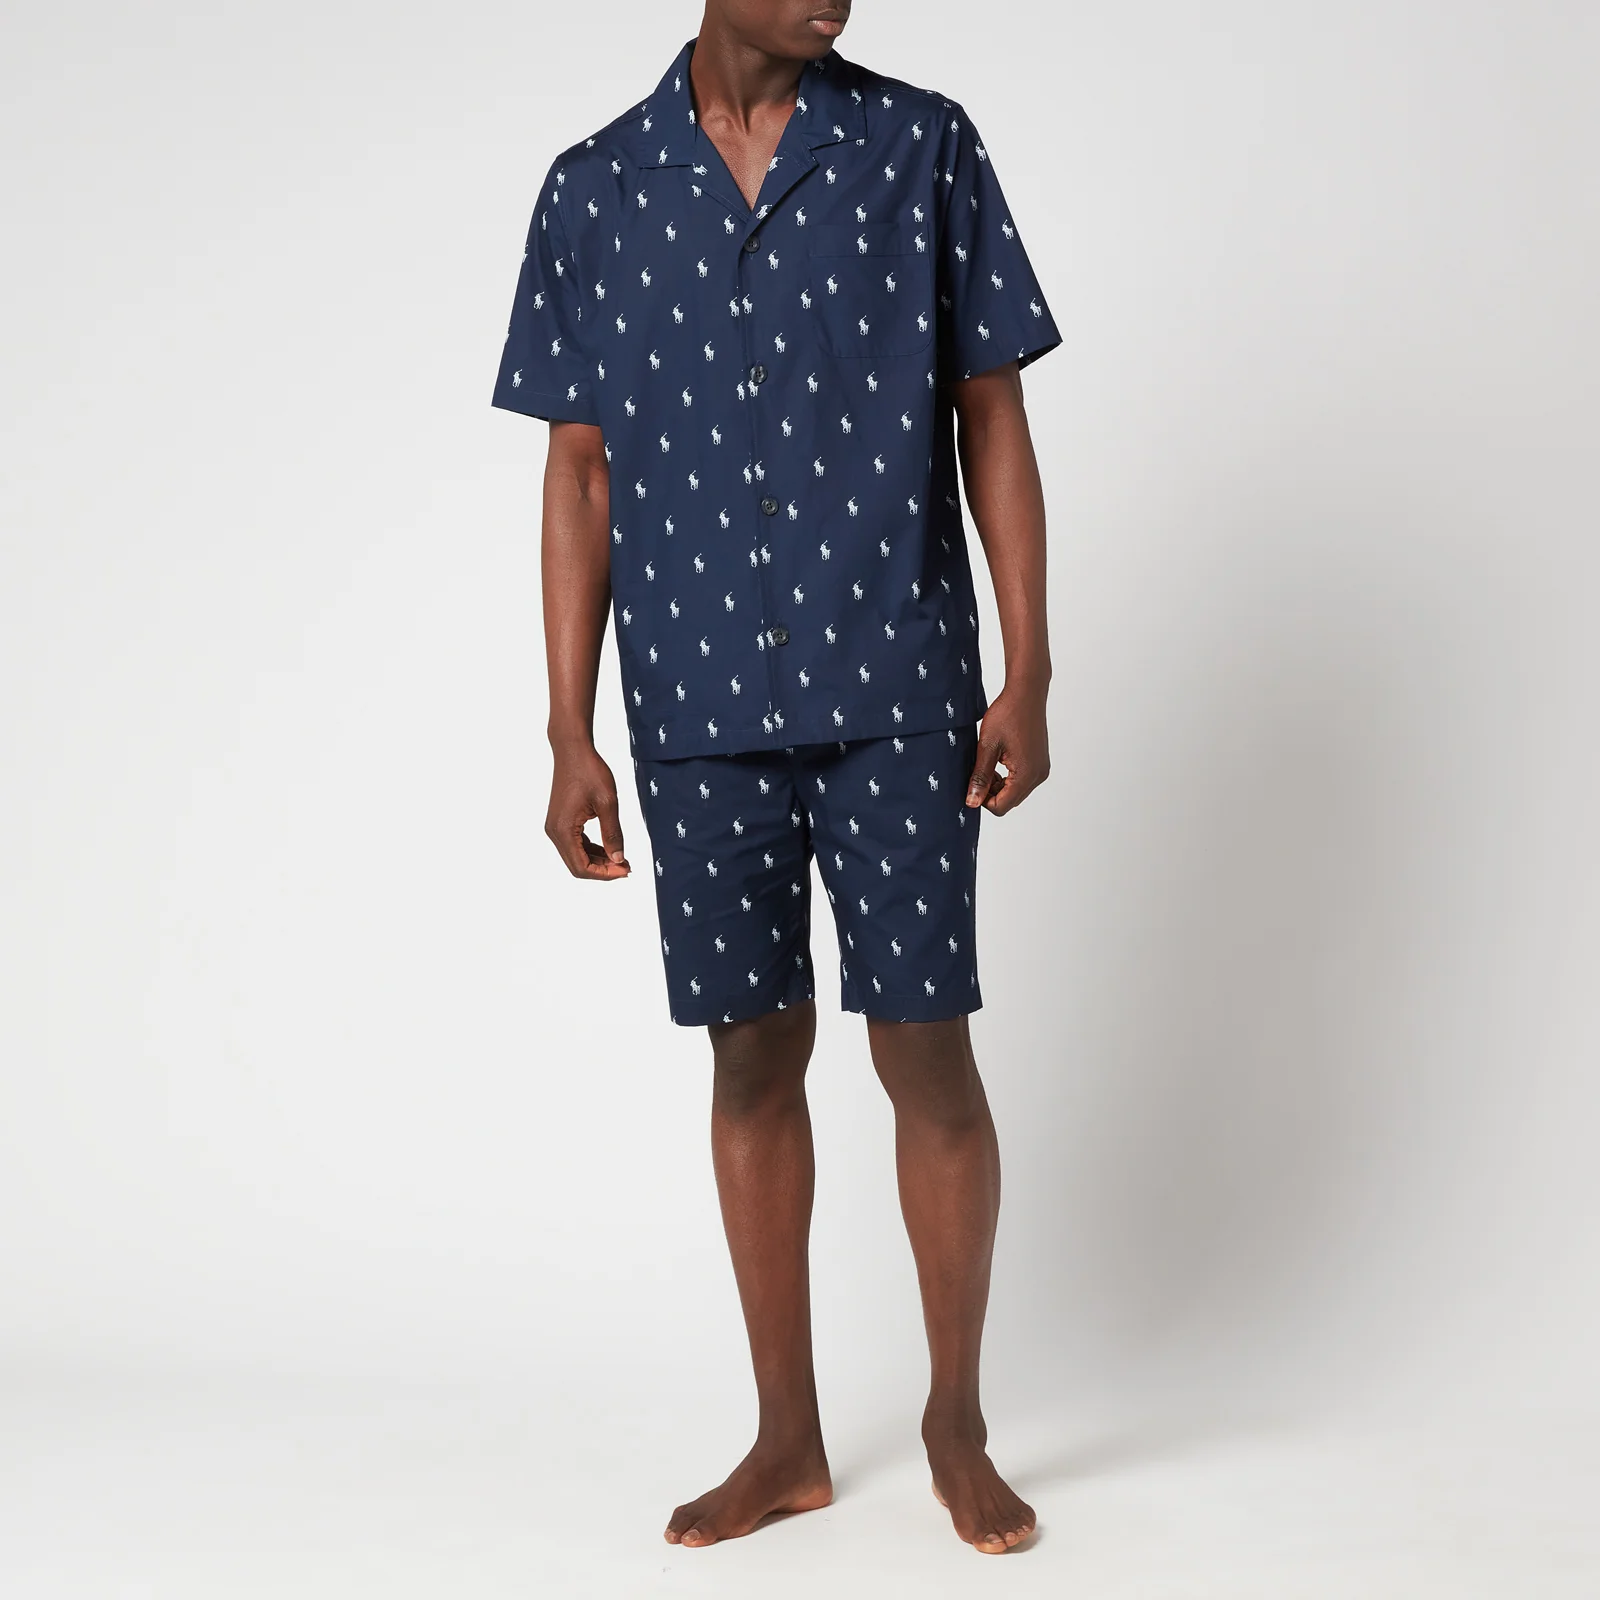 Polo Ralph Lauren Men's All Over Print Pajama Set - Navy/Nevis Image 1